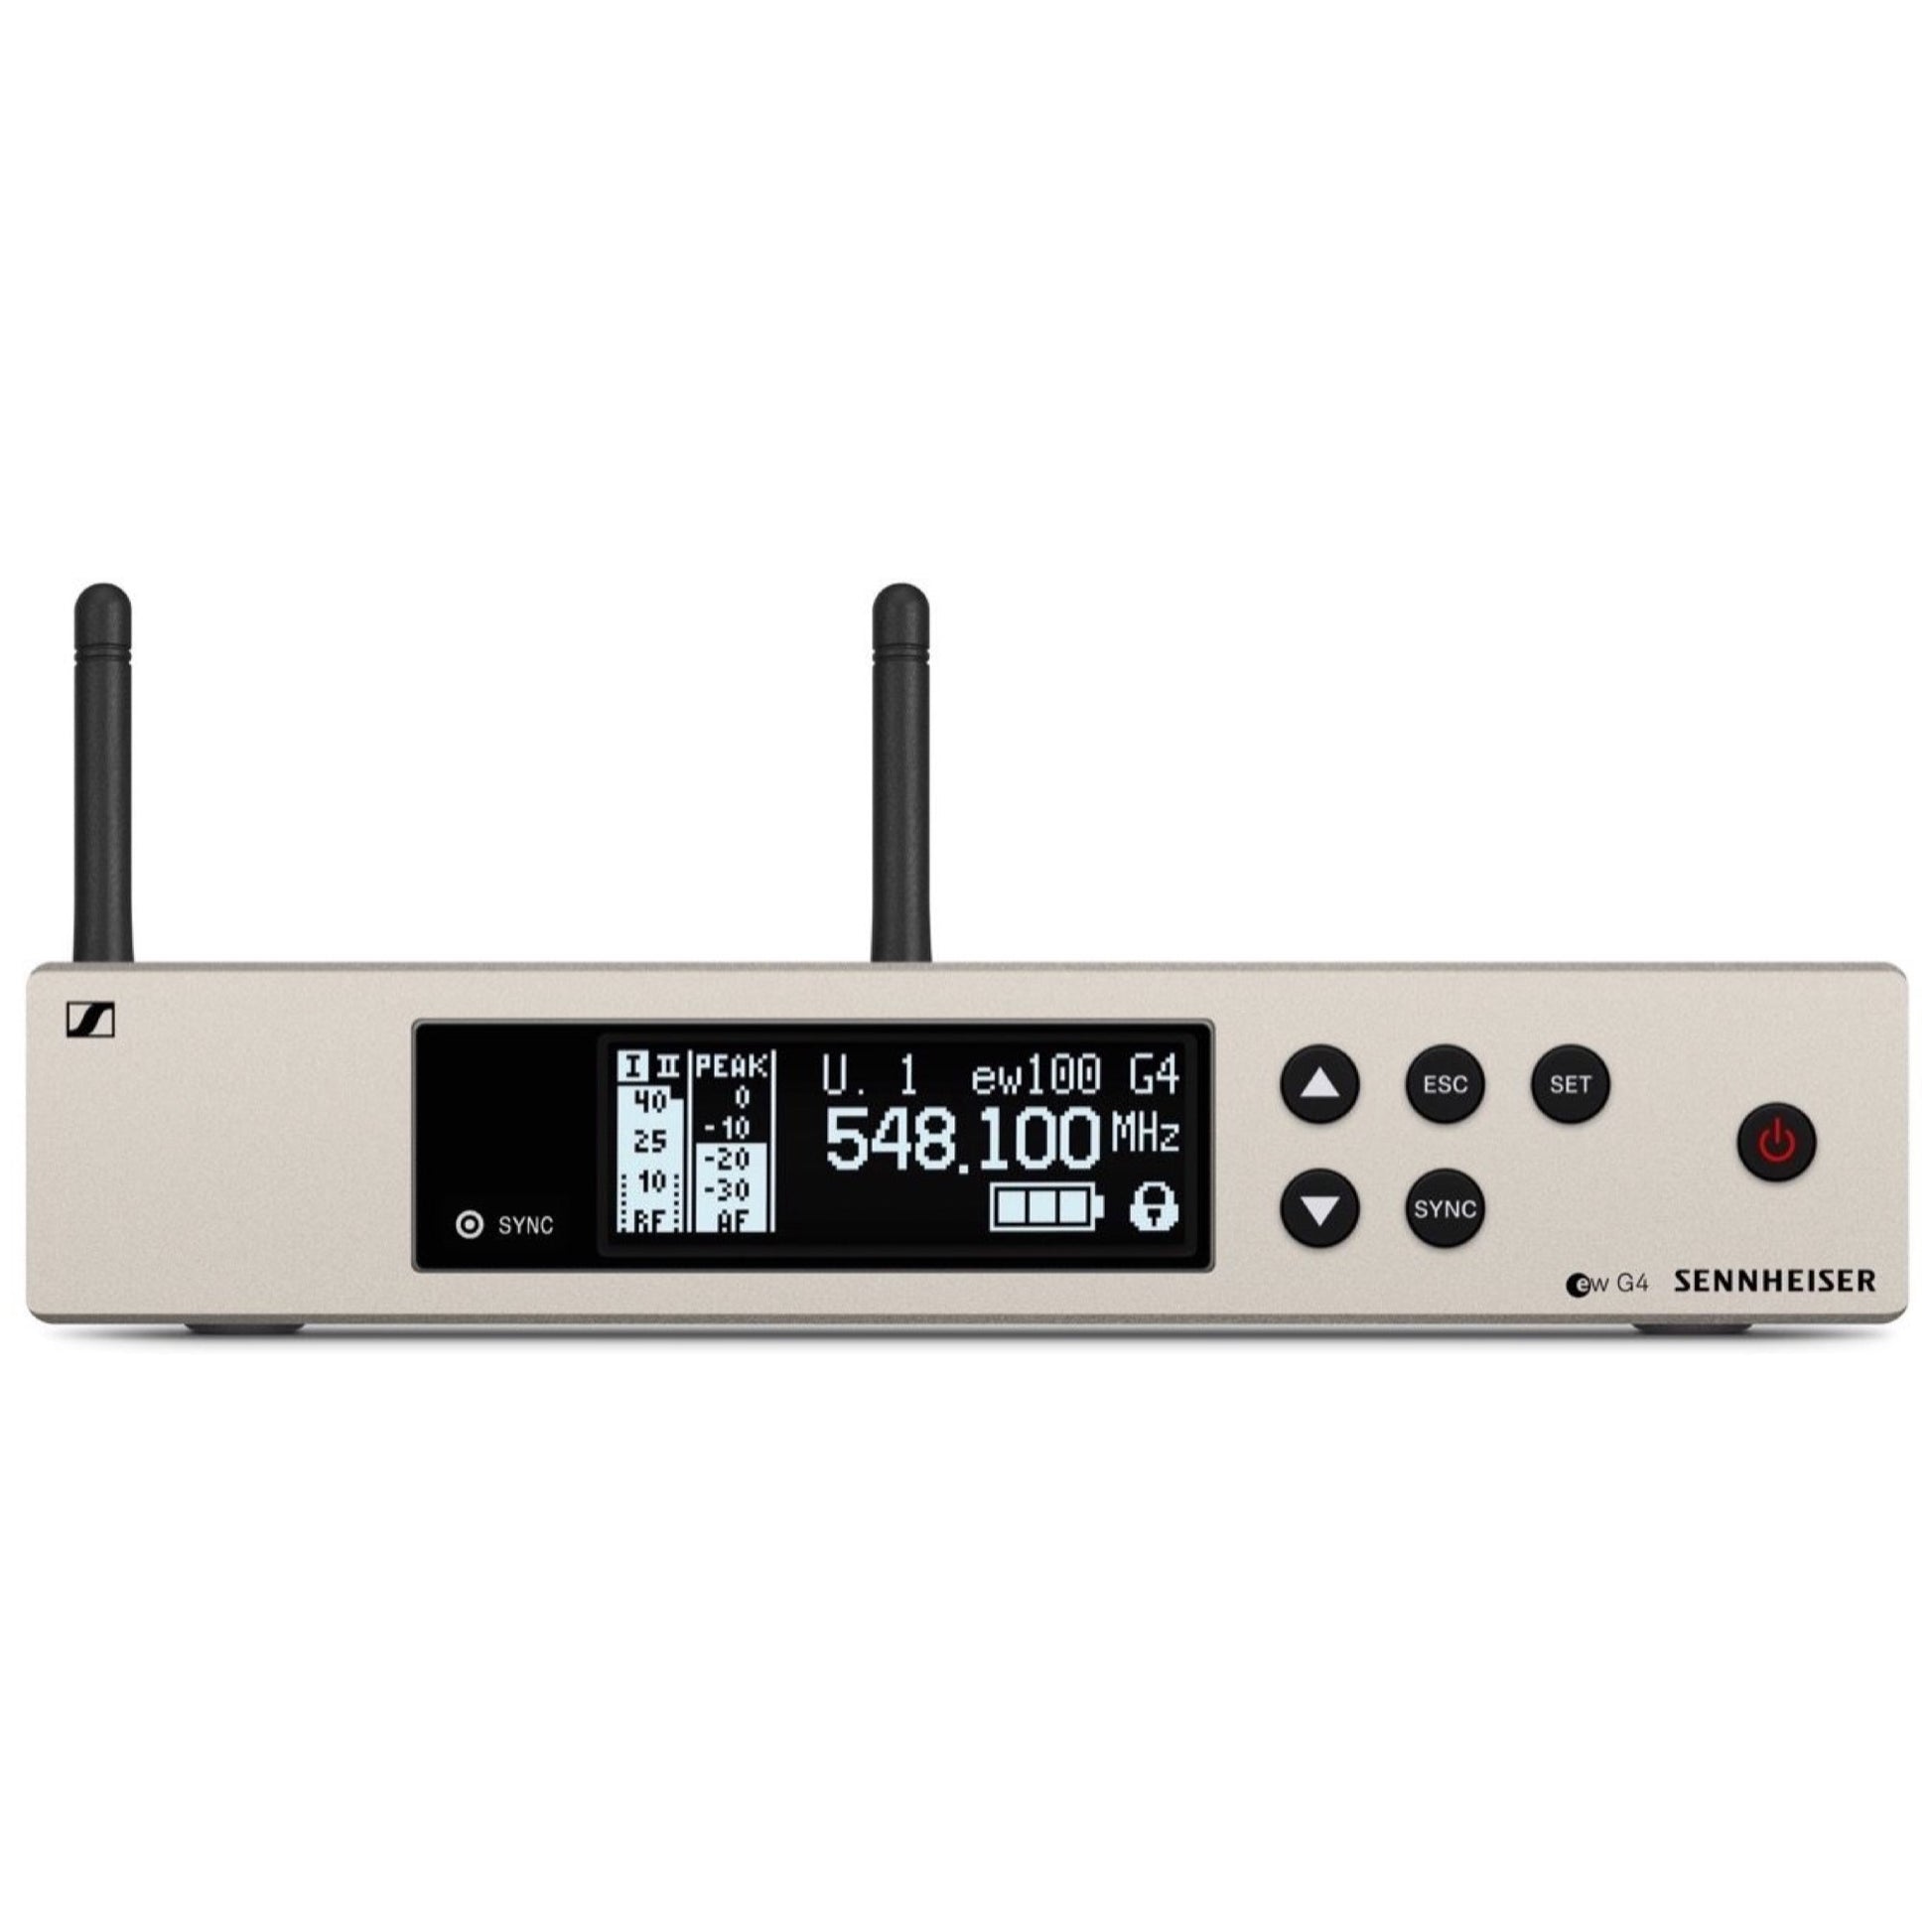 Sennheiser ew100 G4 e835 Vocal Wireless Microphone System, Band G (566-608 MHz)